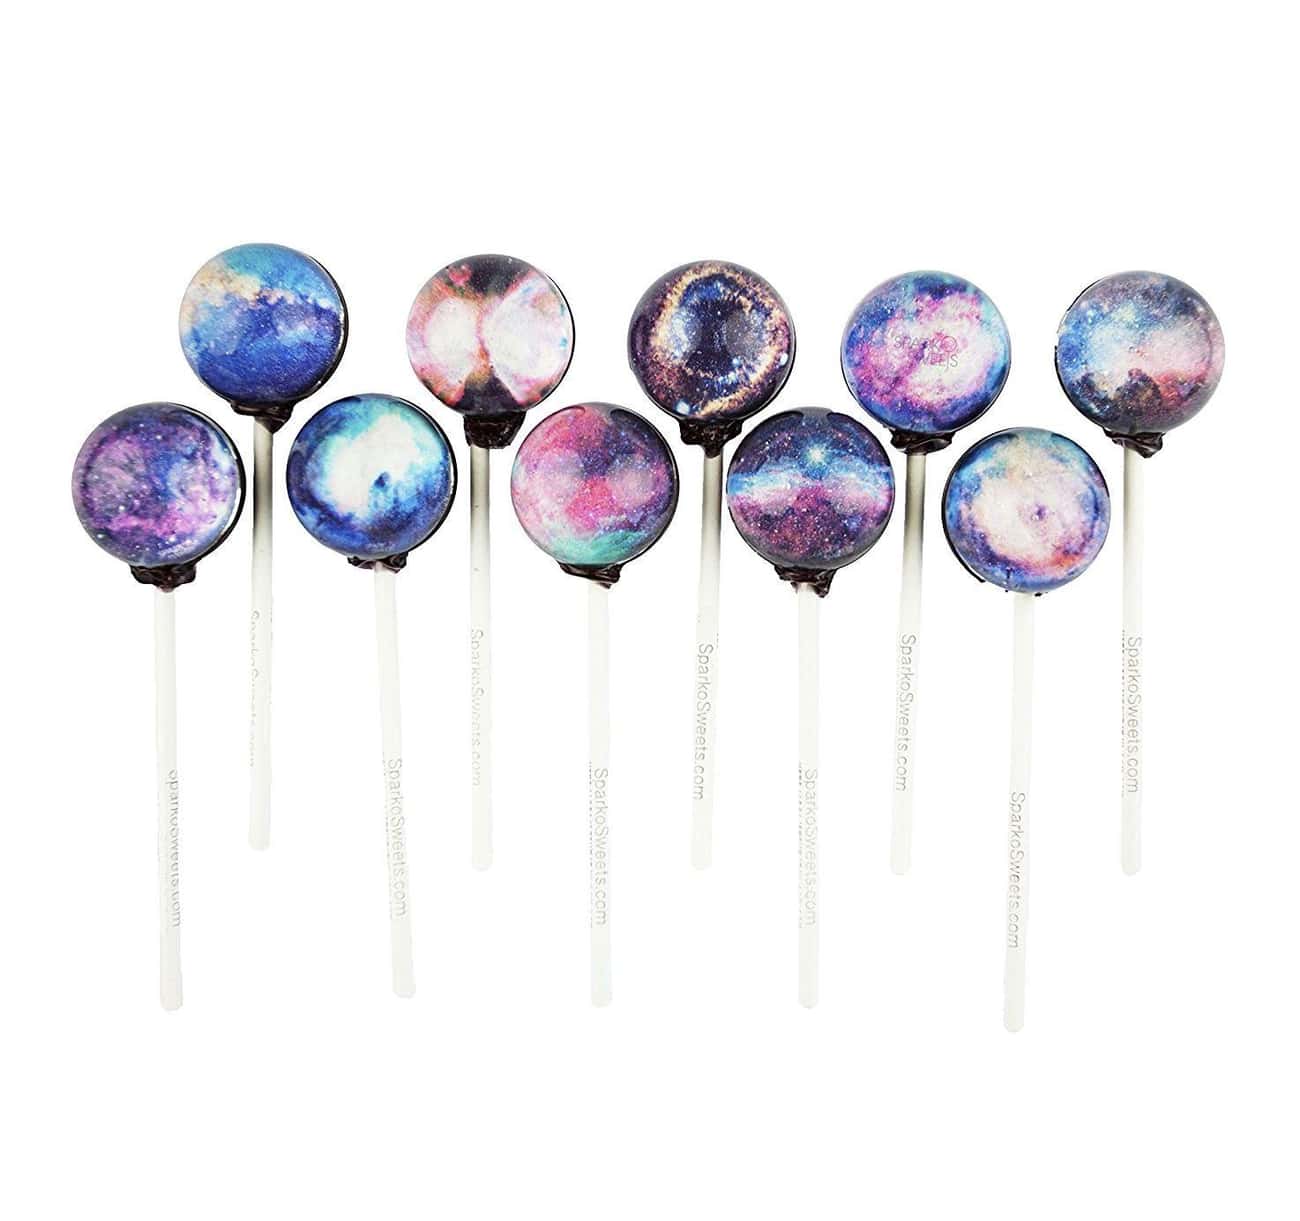 Sparko Sweets Planet Lollipops